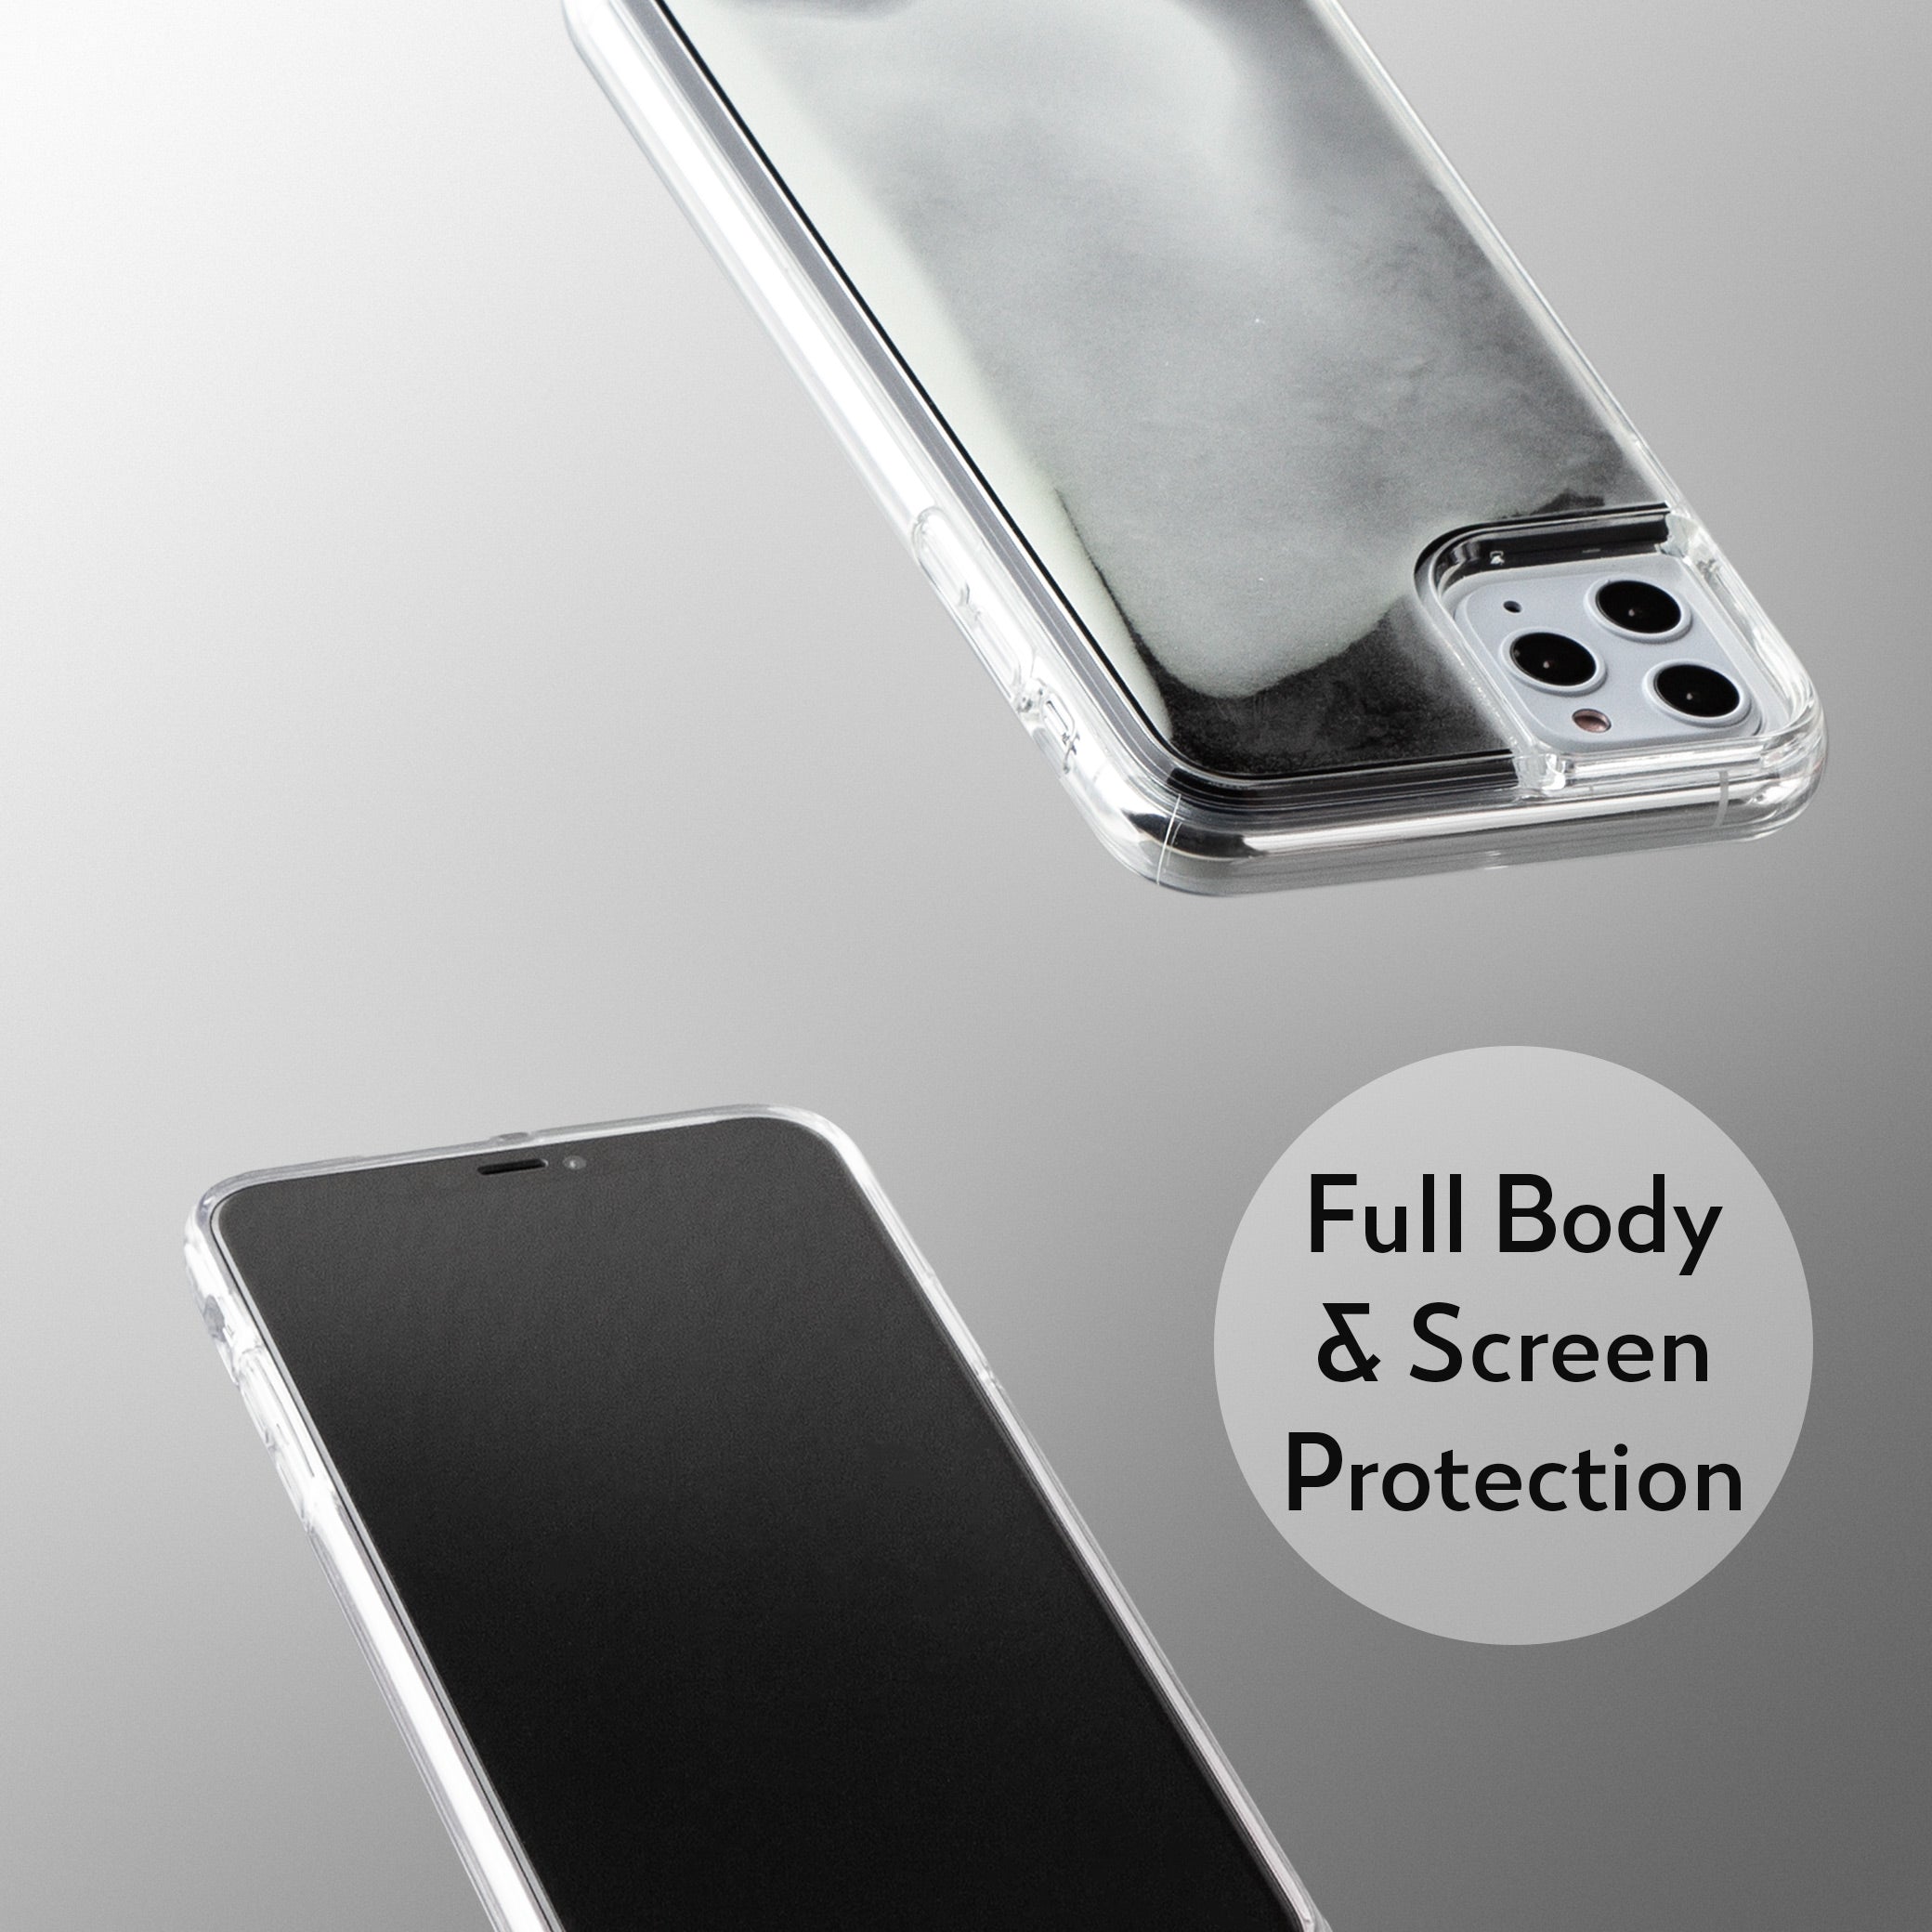 Neon Sand iPhone 11 Pro Max Case - Hi Contrast Black n White